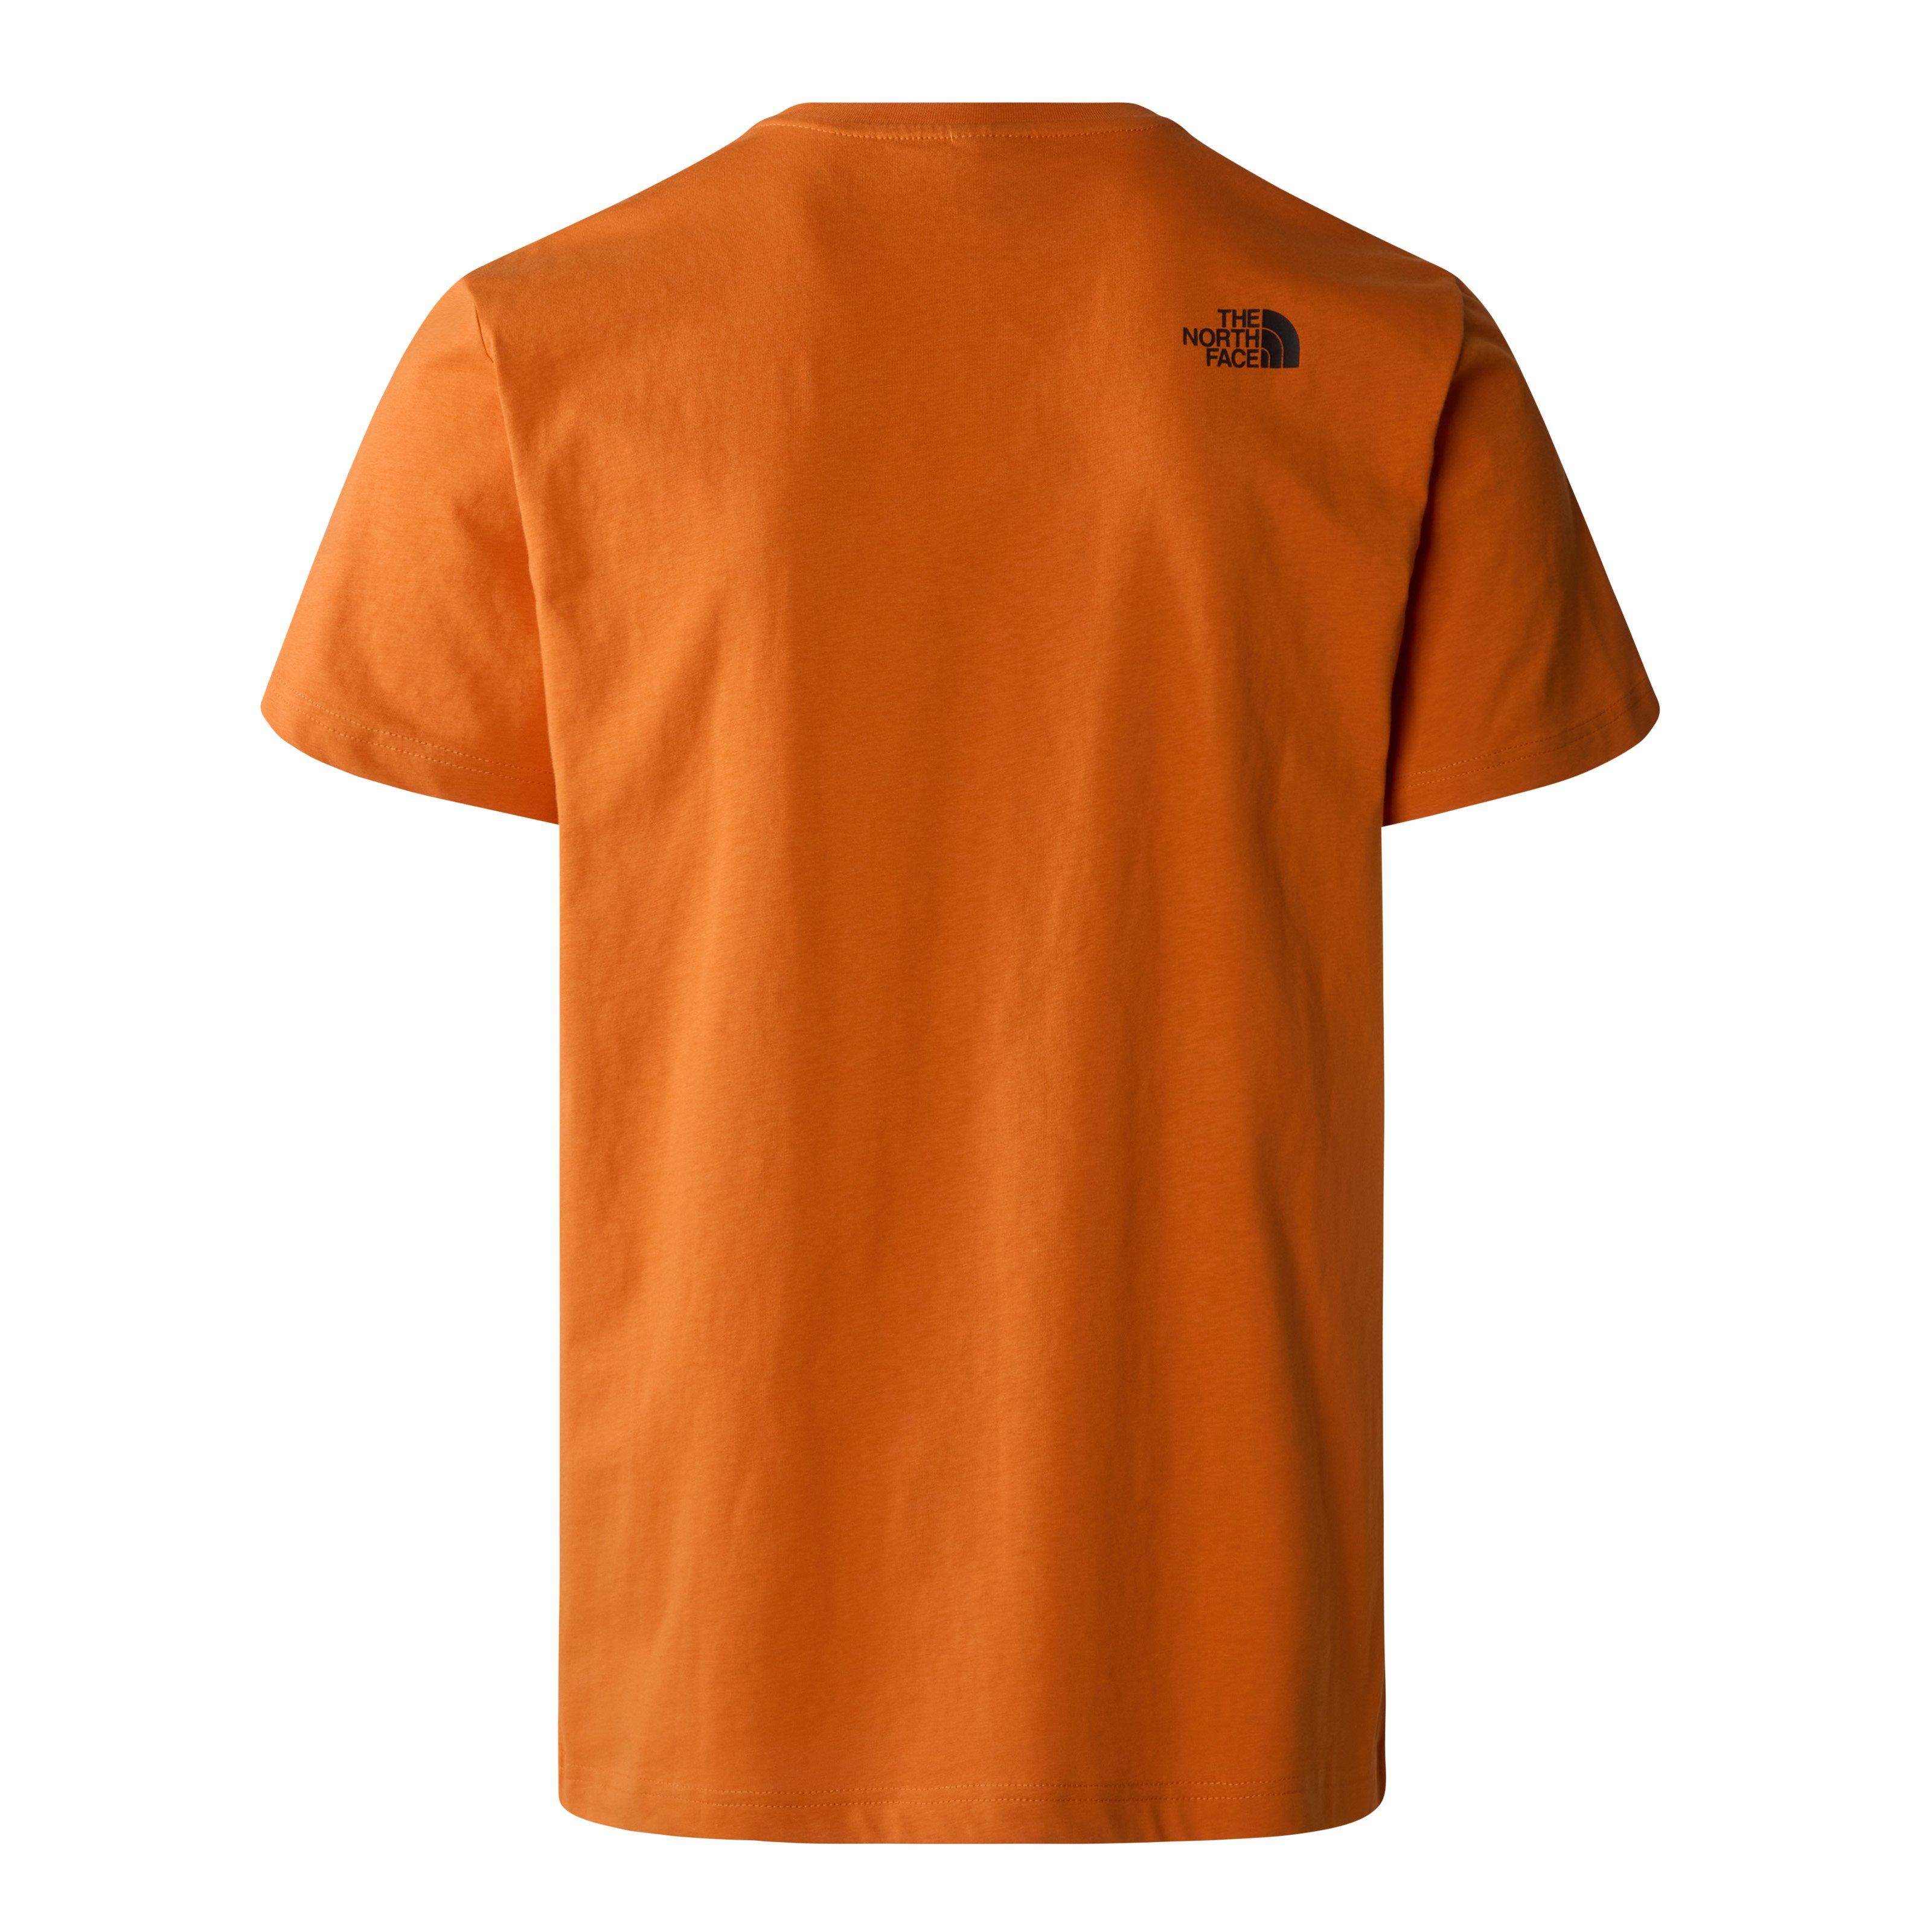 The North Face Men's Short-Sleeve NSE T-Shirt - Orange